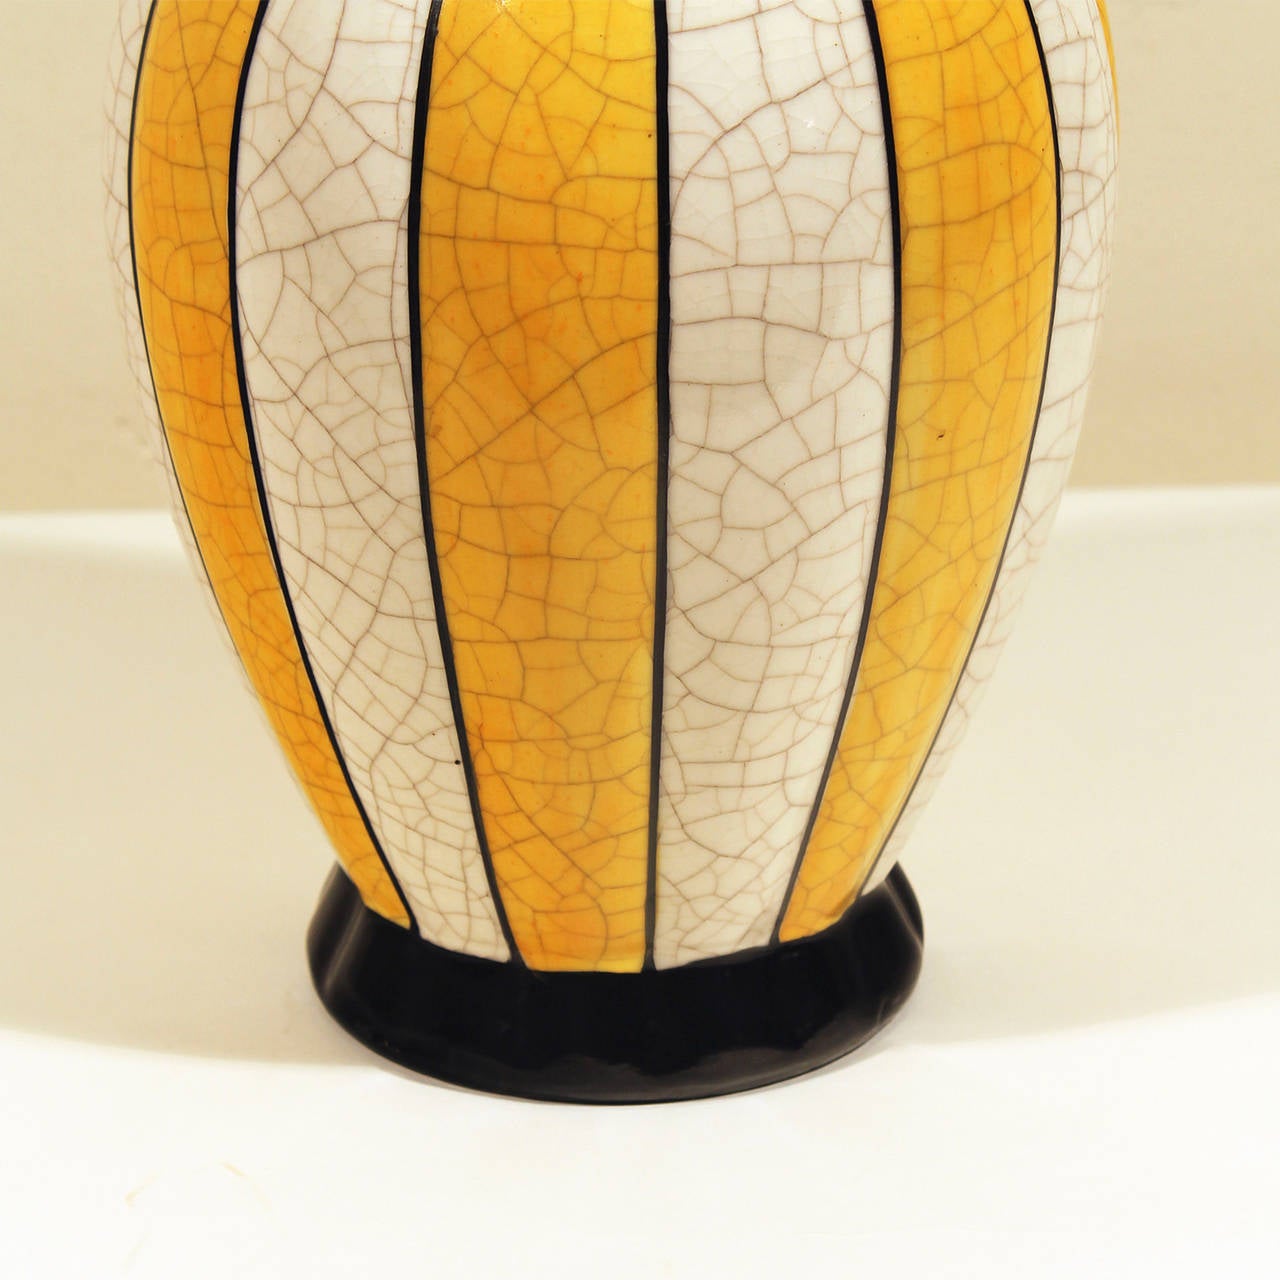 Enameled 1930s Charles Catteau, Boch Keramis - Two Art Deco vases, ceramic - Belgium